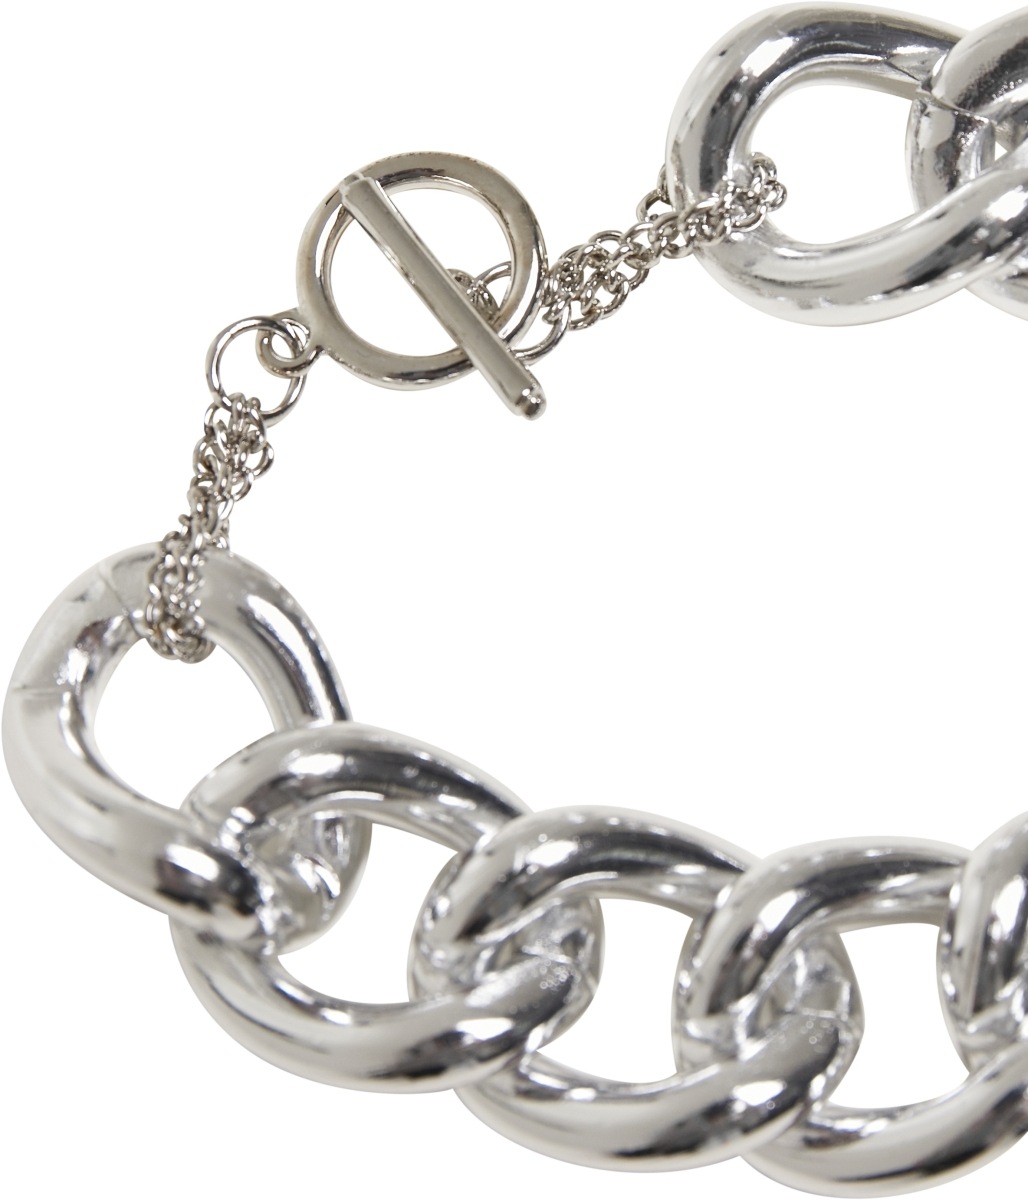 URBAN »Accessories Bracelet« CLASSICS BAUR | Armband kaufen Flashy Chain